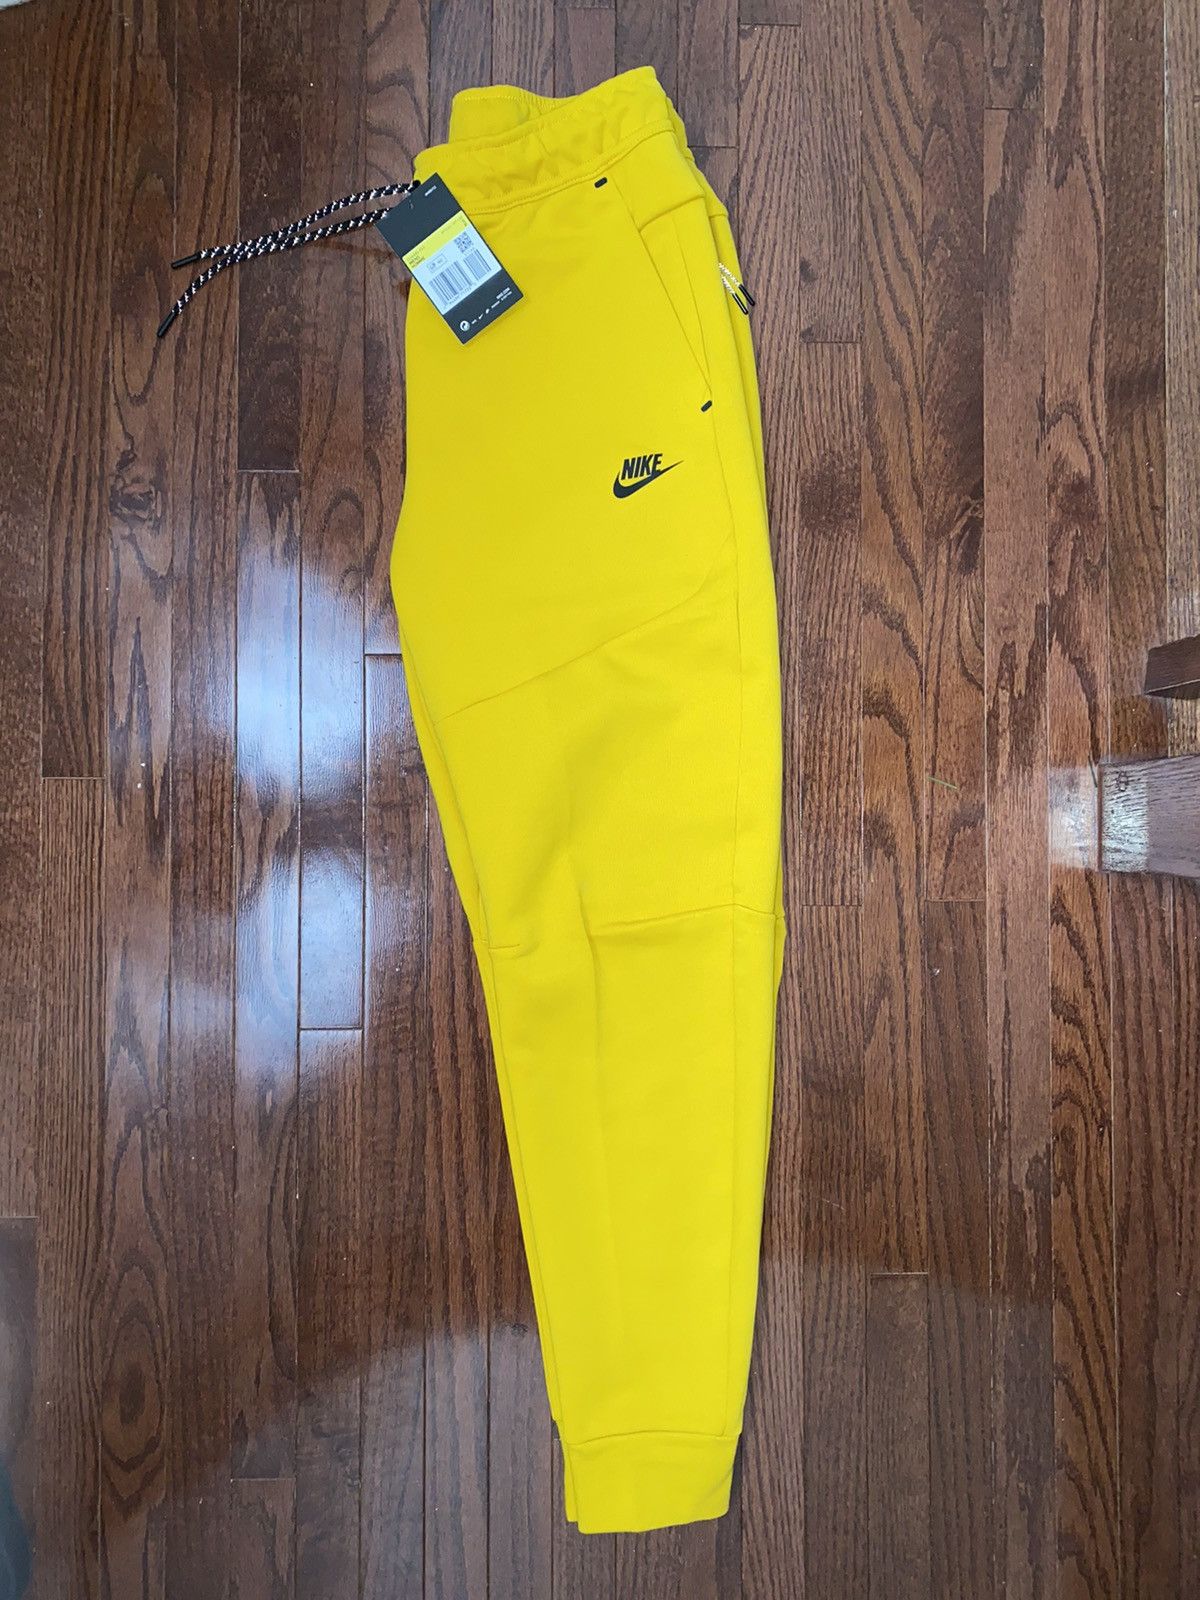 Nike New Nike Tech Fleece Pants Yellow Size US 30 / EU 46 - 2 Preview